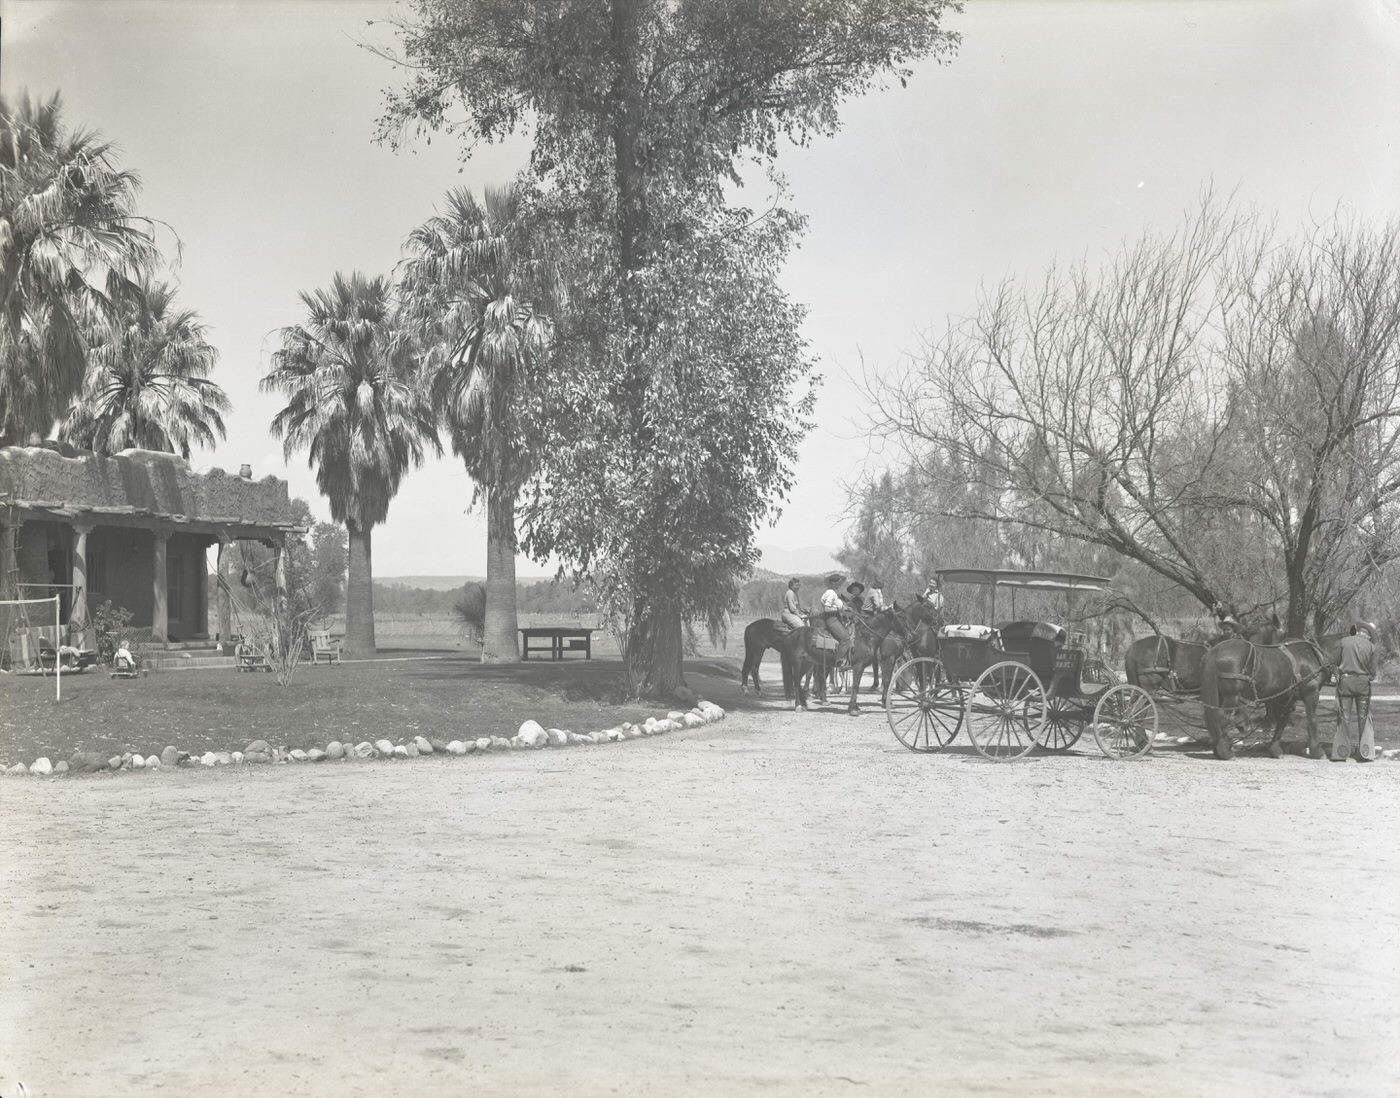 Bar FX Ranch Guests on Horseback, 1930s